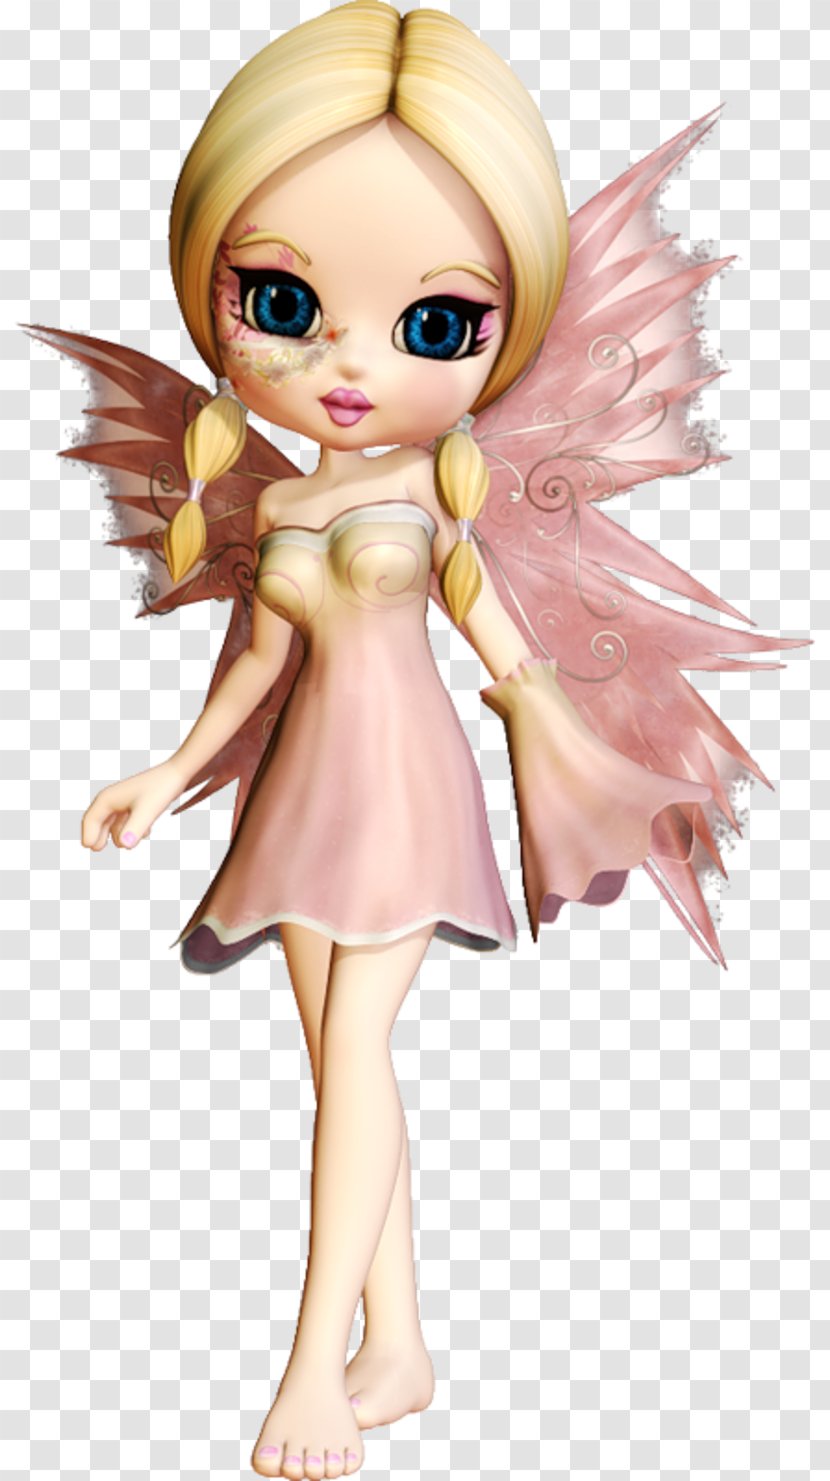 Pixie Hollow Fairy Doll Elf Figurine Transparent PNG